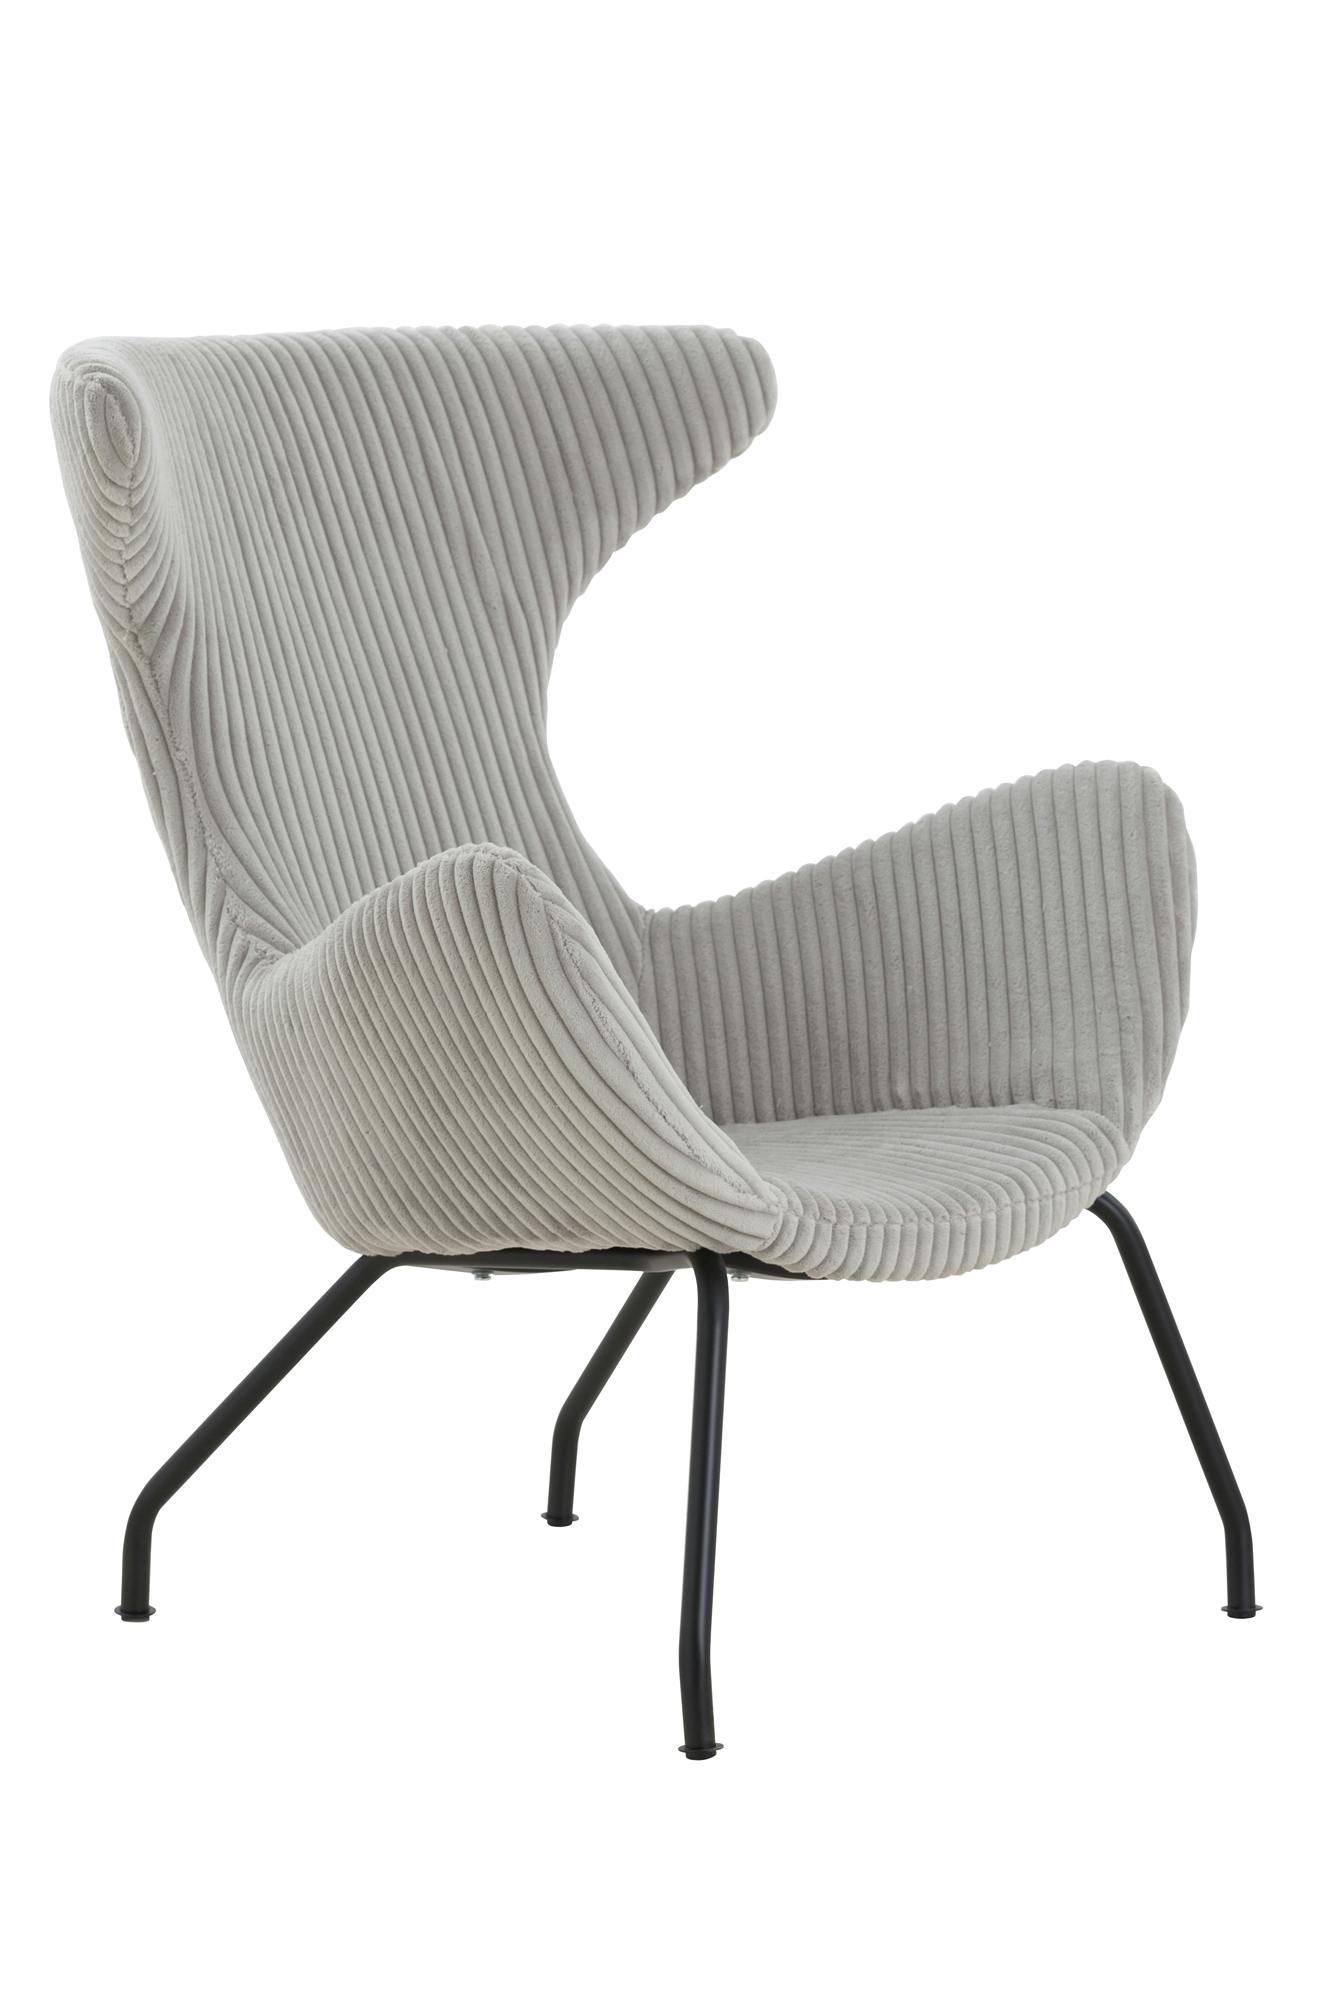 SalesFever Relax-Sessel | Bezug Texturstoff grau | Gestell Metall schwarz |  B 78 x T 77 x H 96 cm | METRO Marktplatz | Sessel